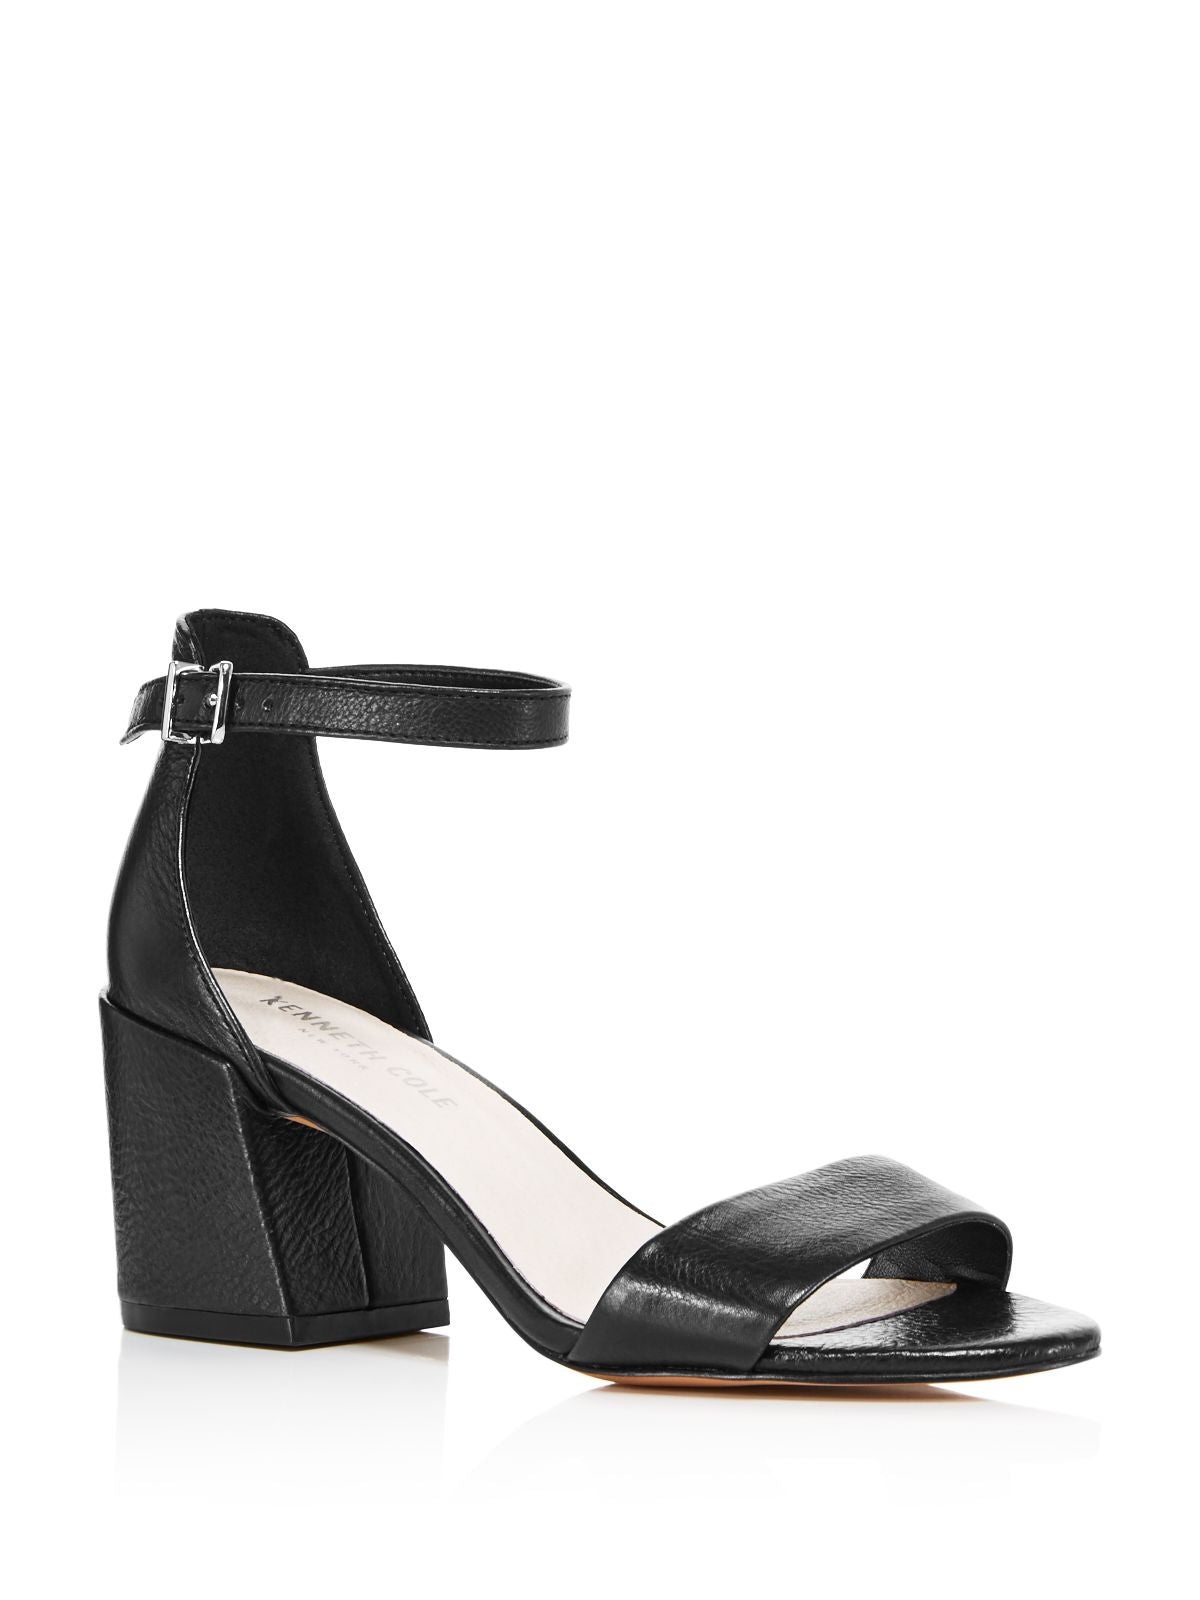 KENNETH COLE Womens Black Ankle Strap Comfort Hannon Round Toe Block Heel Buckle Leather Dress Heeled Sandal 8 M